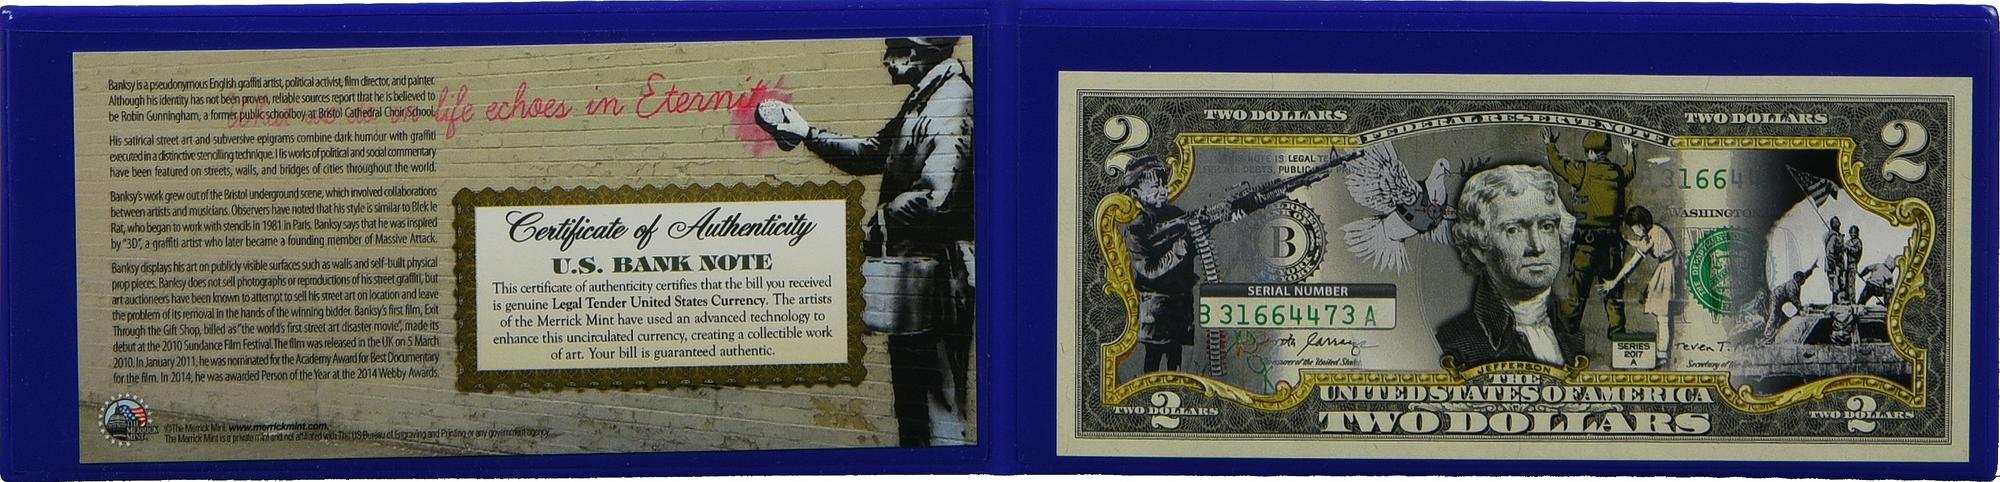 Merrick Mint BANKSY POSTING SIGNS stampa su banconota, cm 6,5x15,5 L'opera e'...